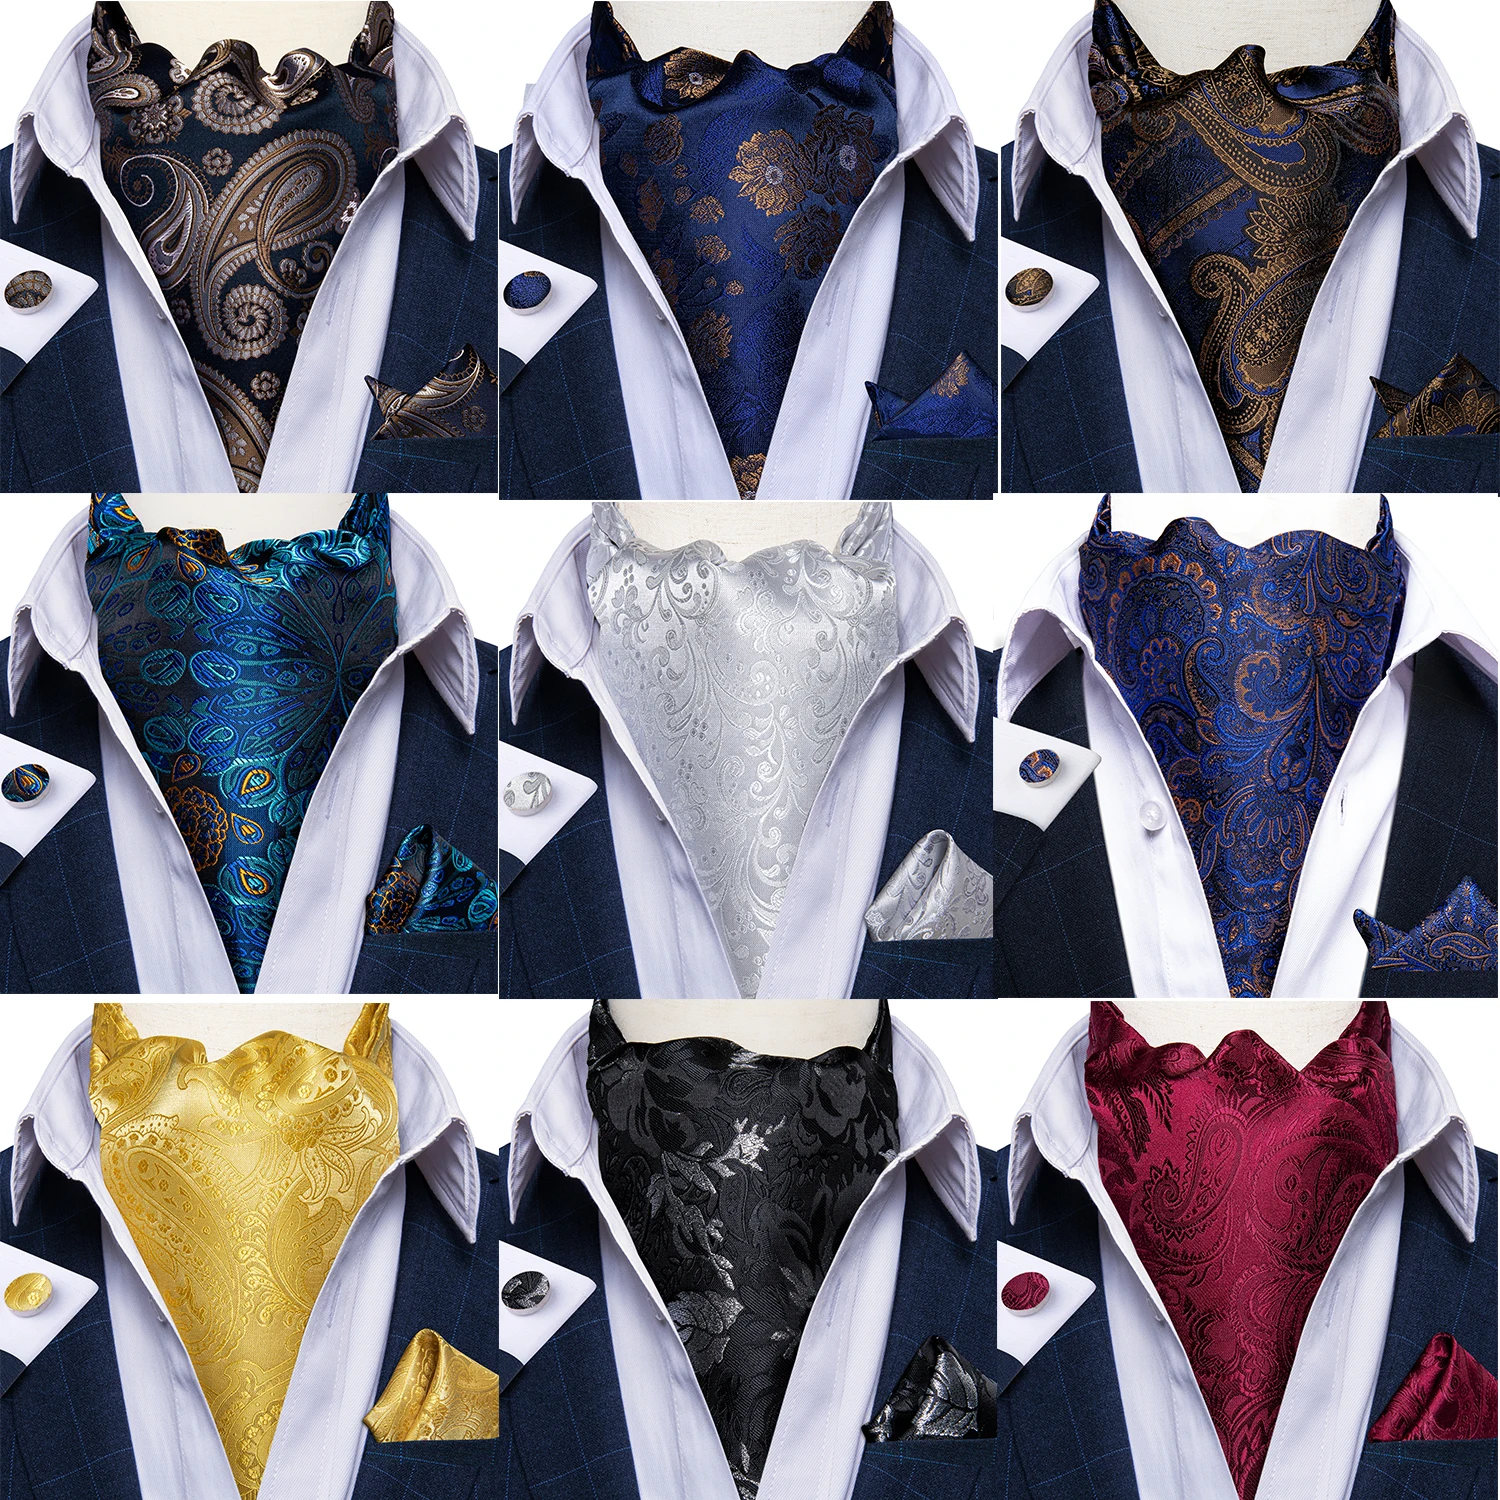 New Men‘s Silk Ascot Tie Set Cravat Ascot Paisley Floral Handkerchief Woven Ties 